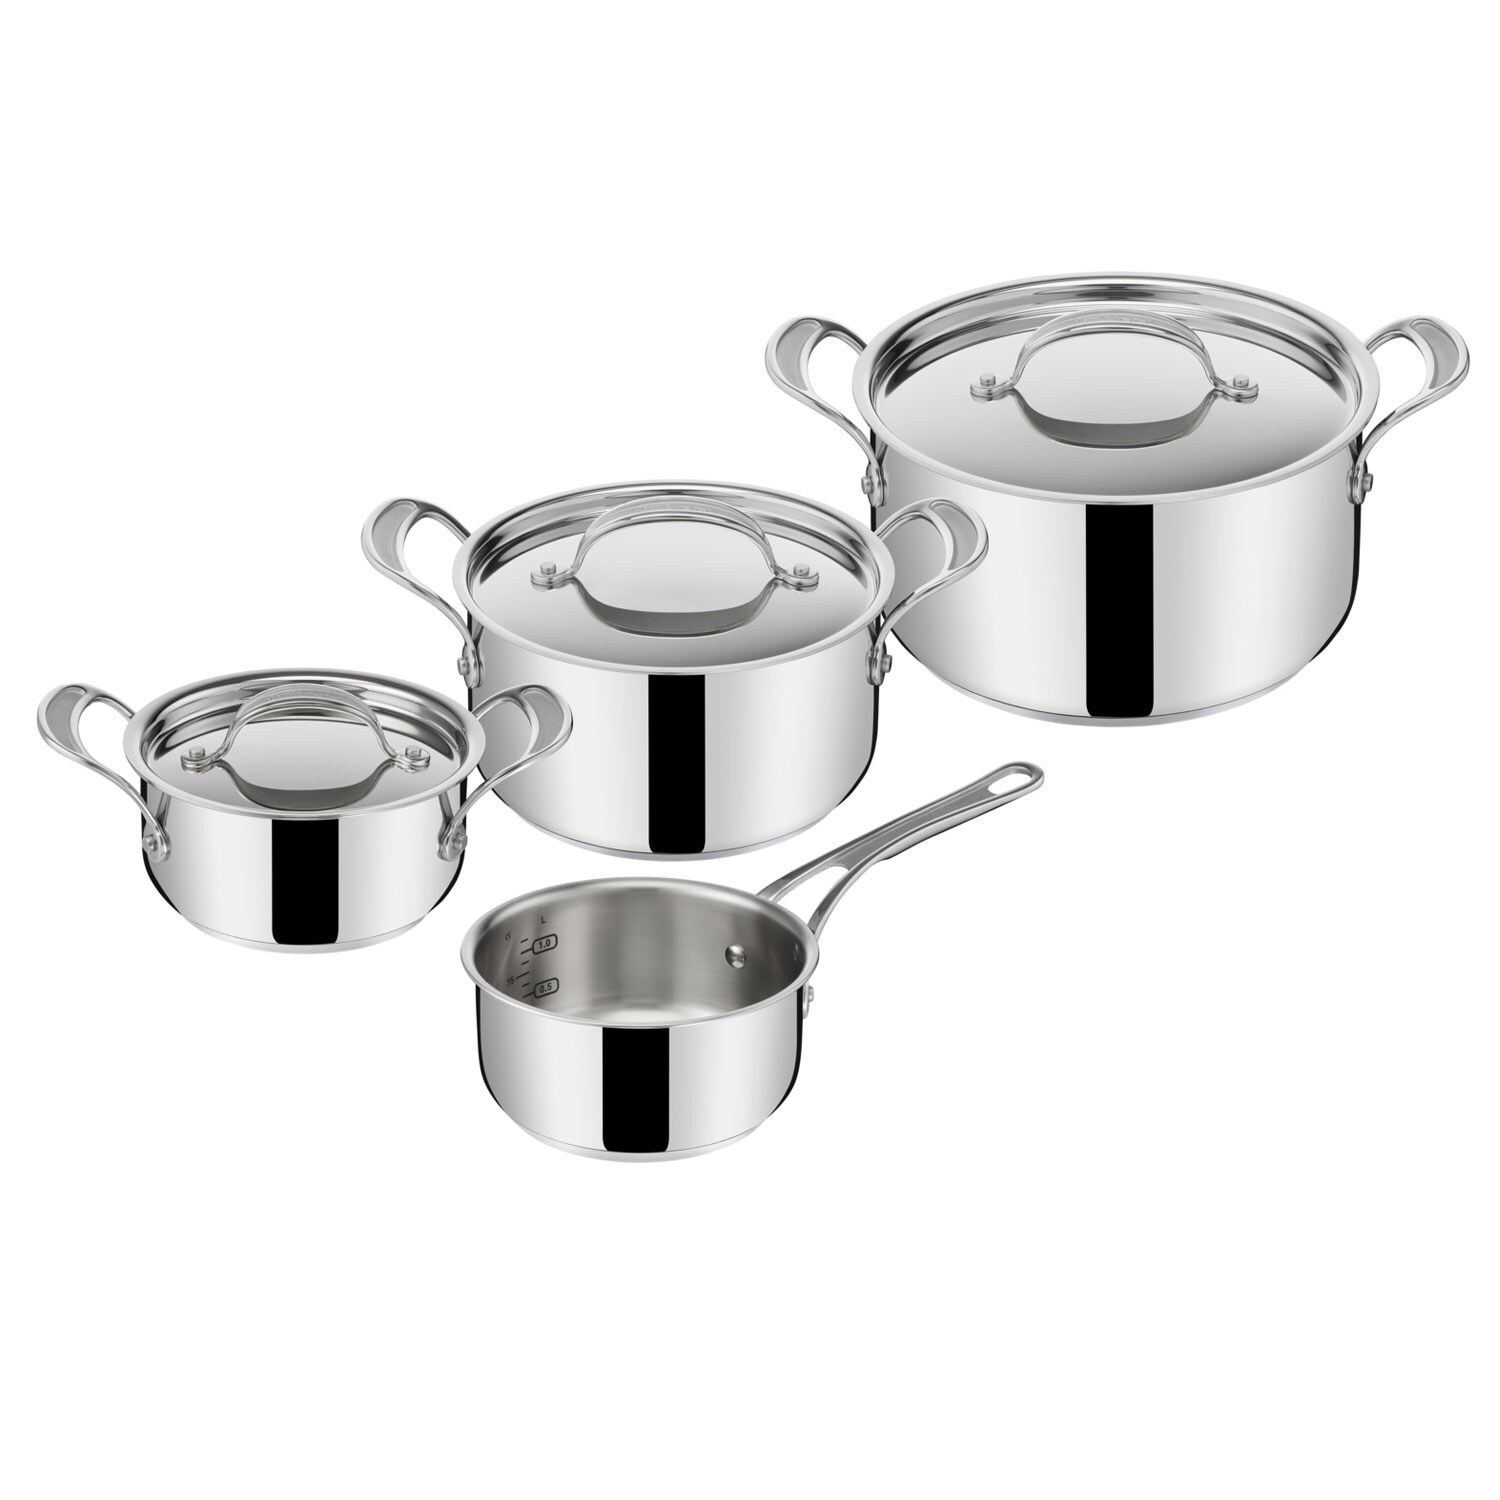 https://royaldesign.com/image/2/tefal-jamie-oliver-cooks-classic-pot-set-stainless-steel-7-pieces-0